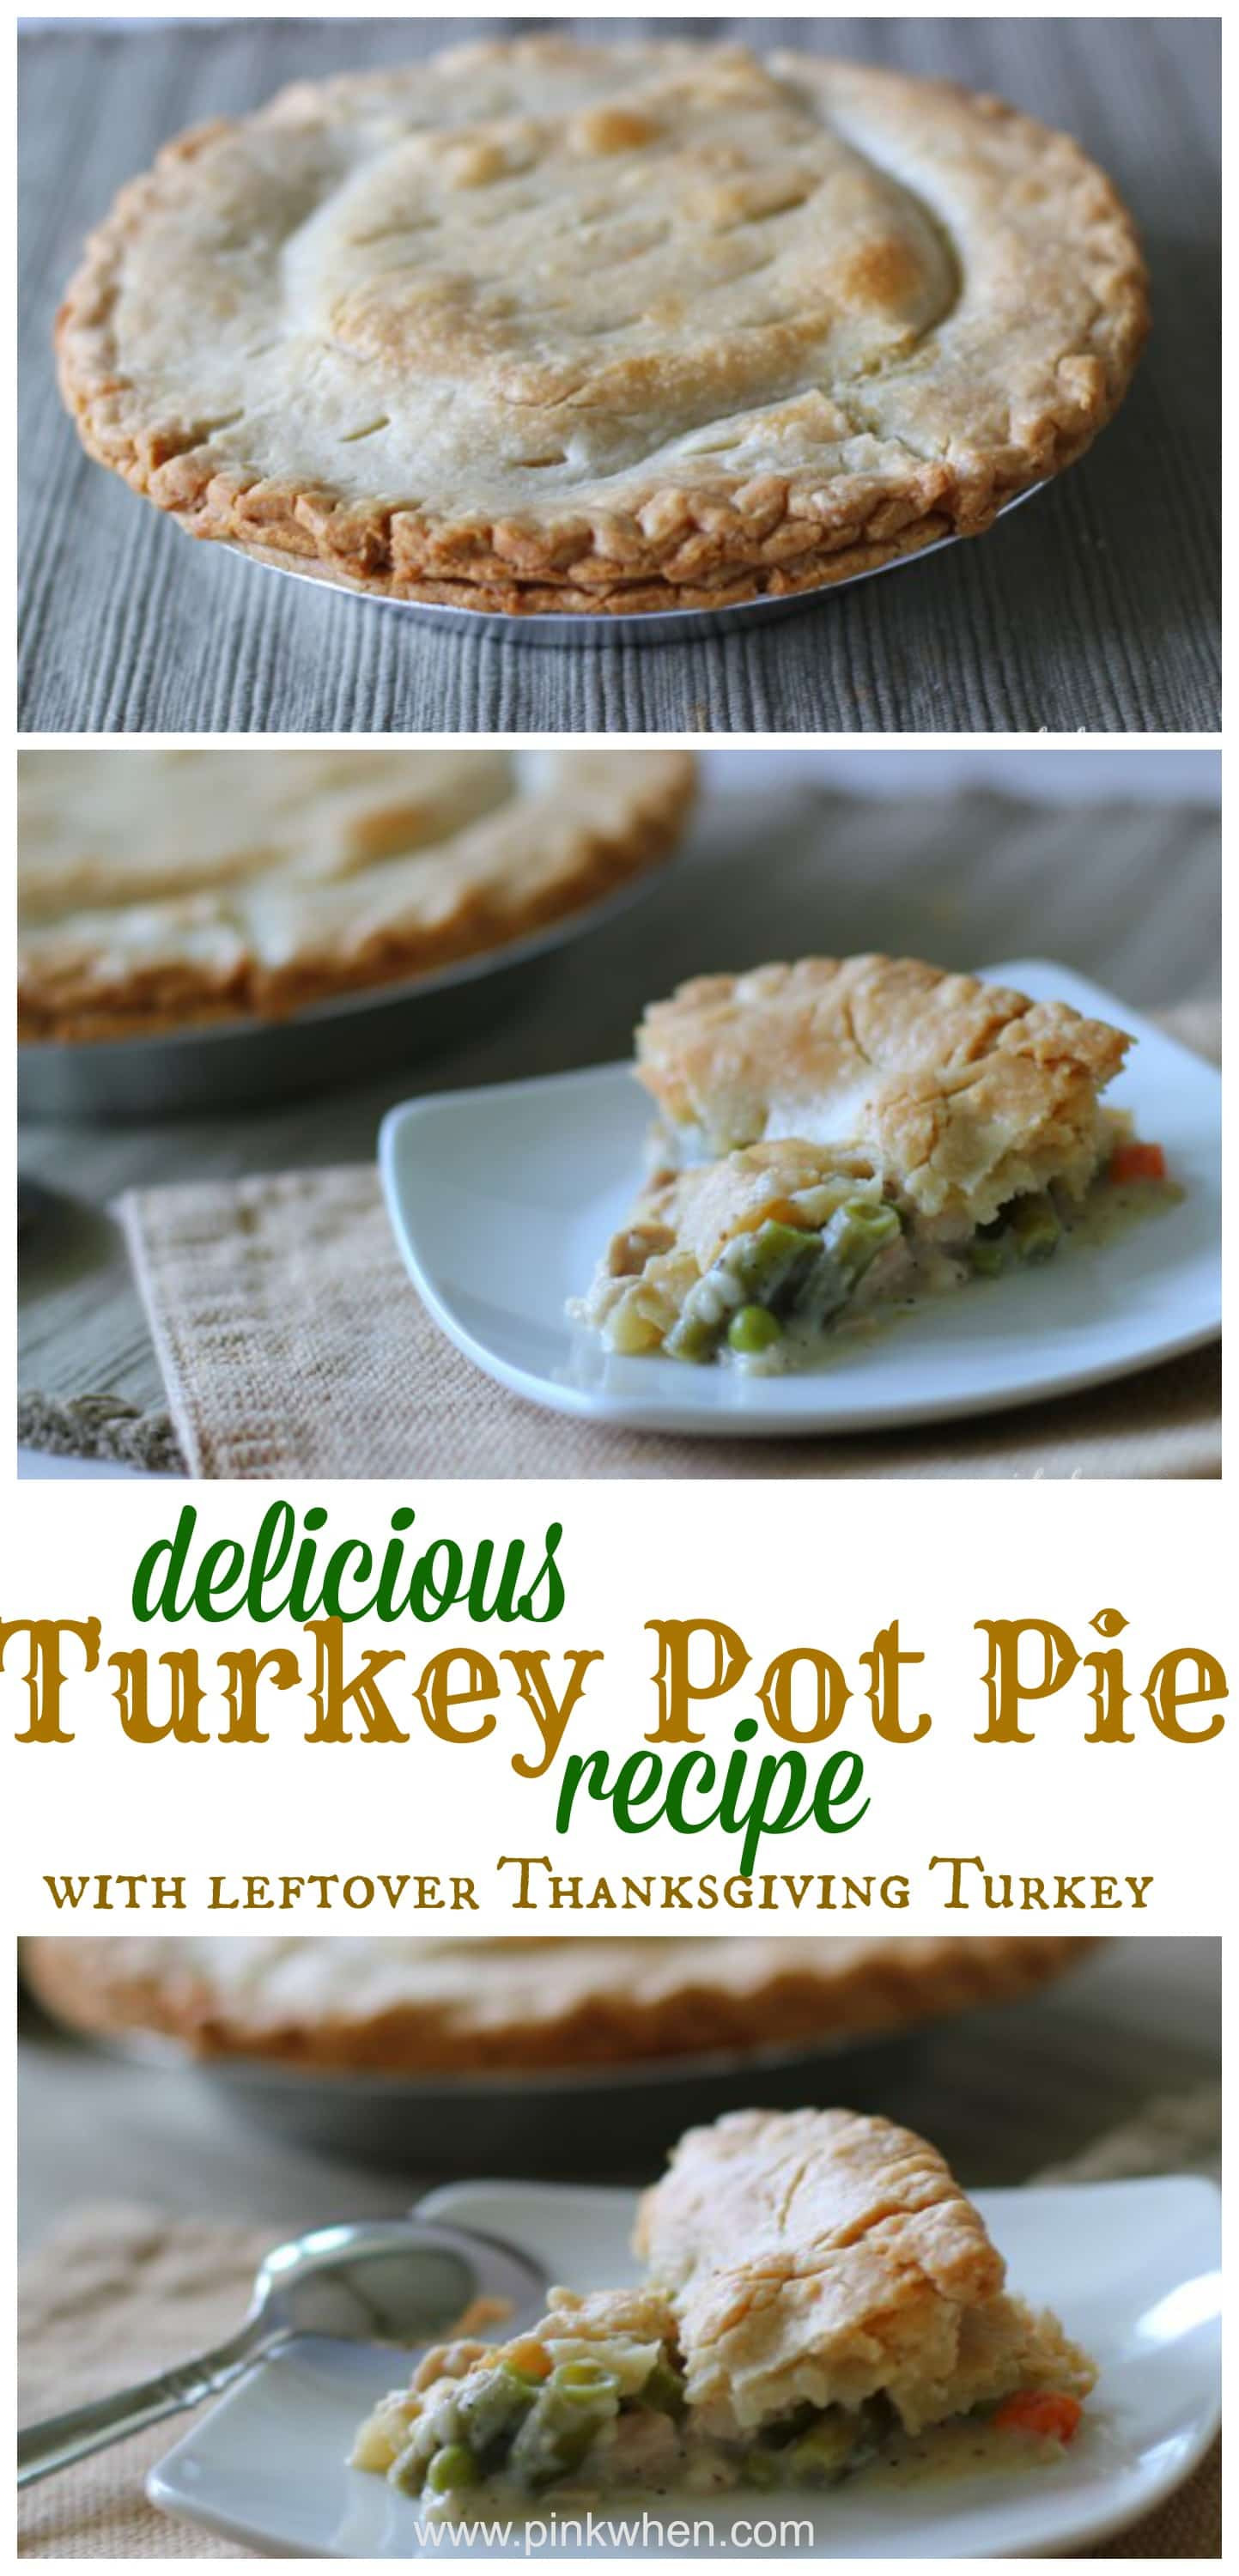 Delicious Turkey Recipes For Thanksgiving
 Delicious Turkey Pot Pie Recipe PinkWhen